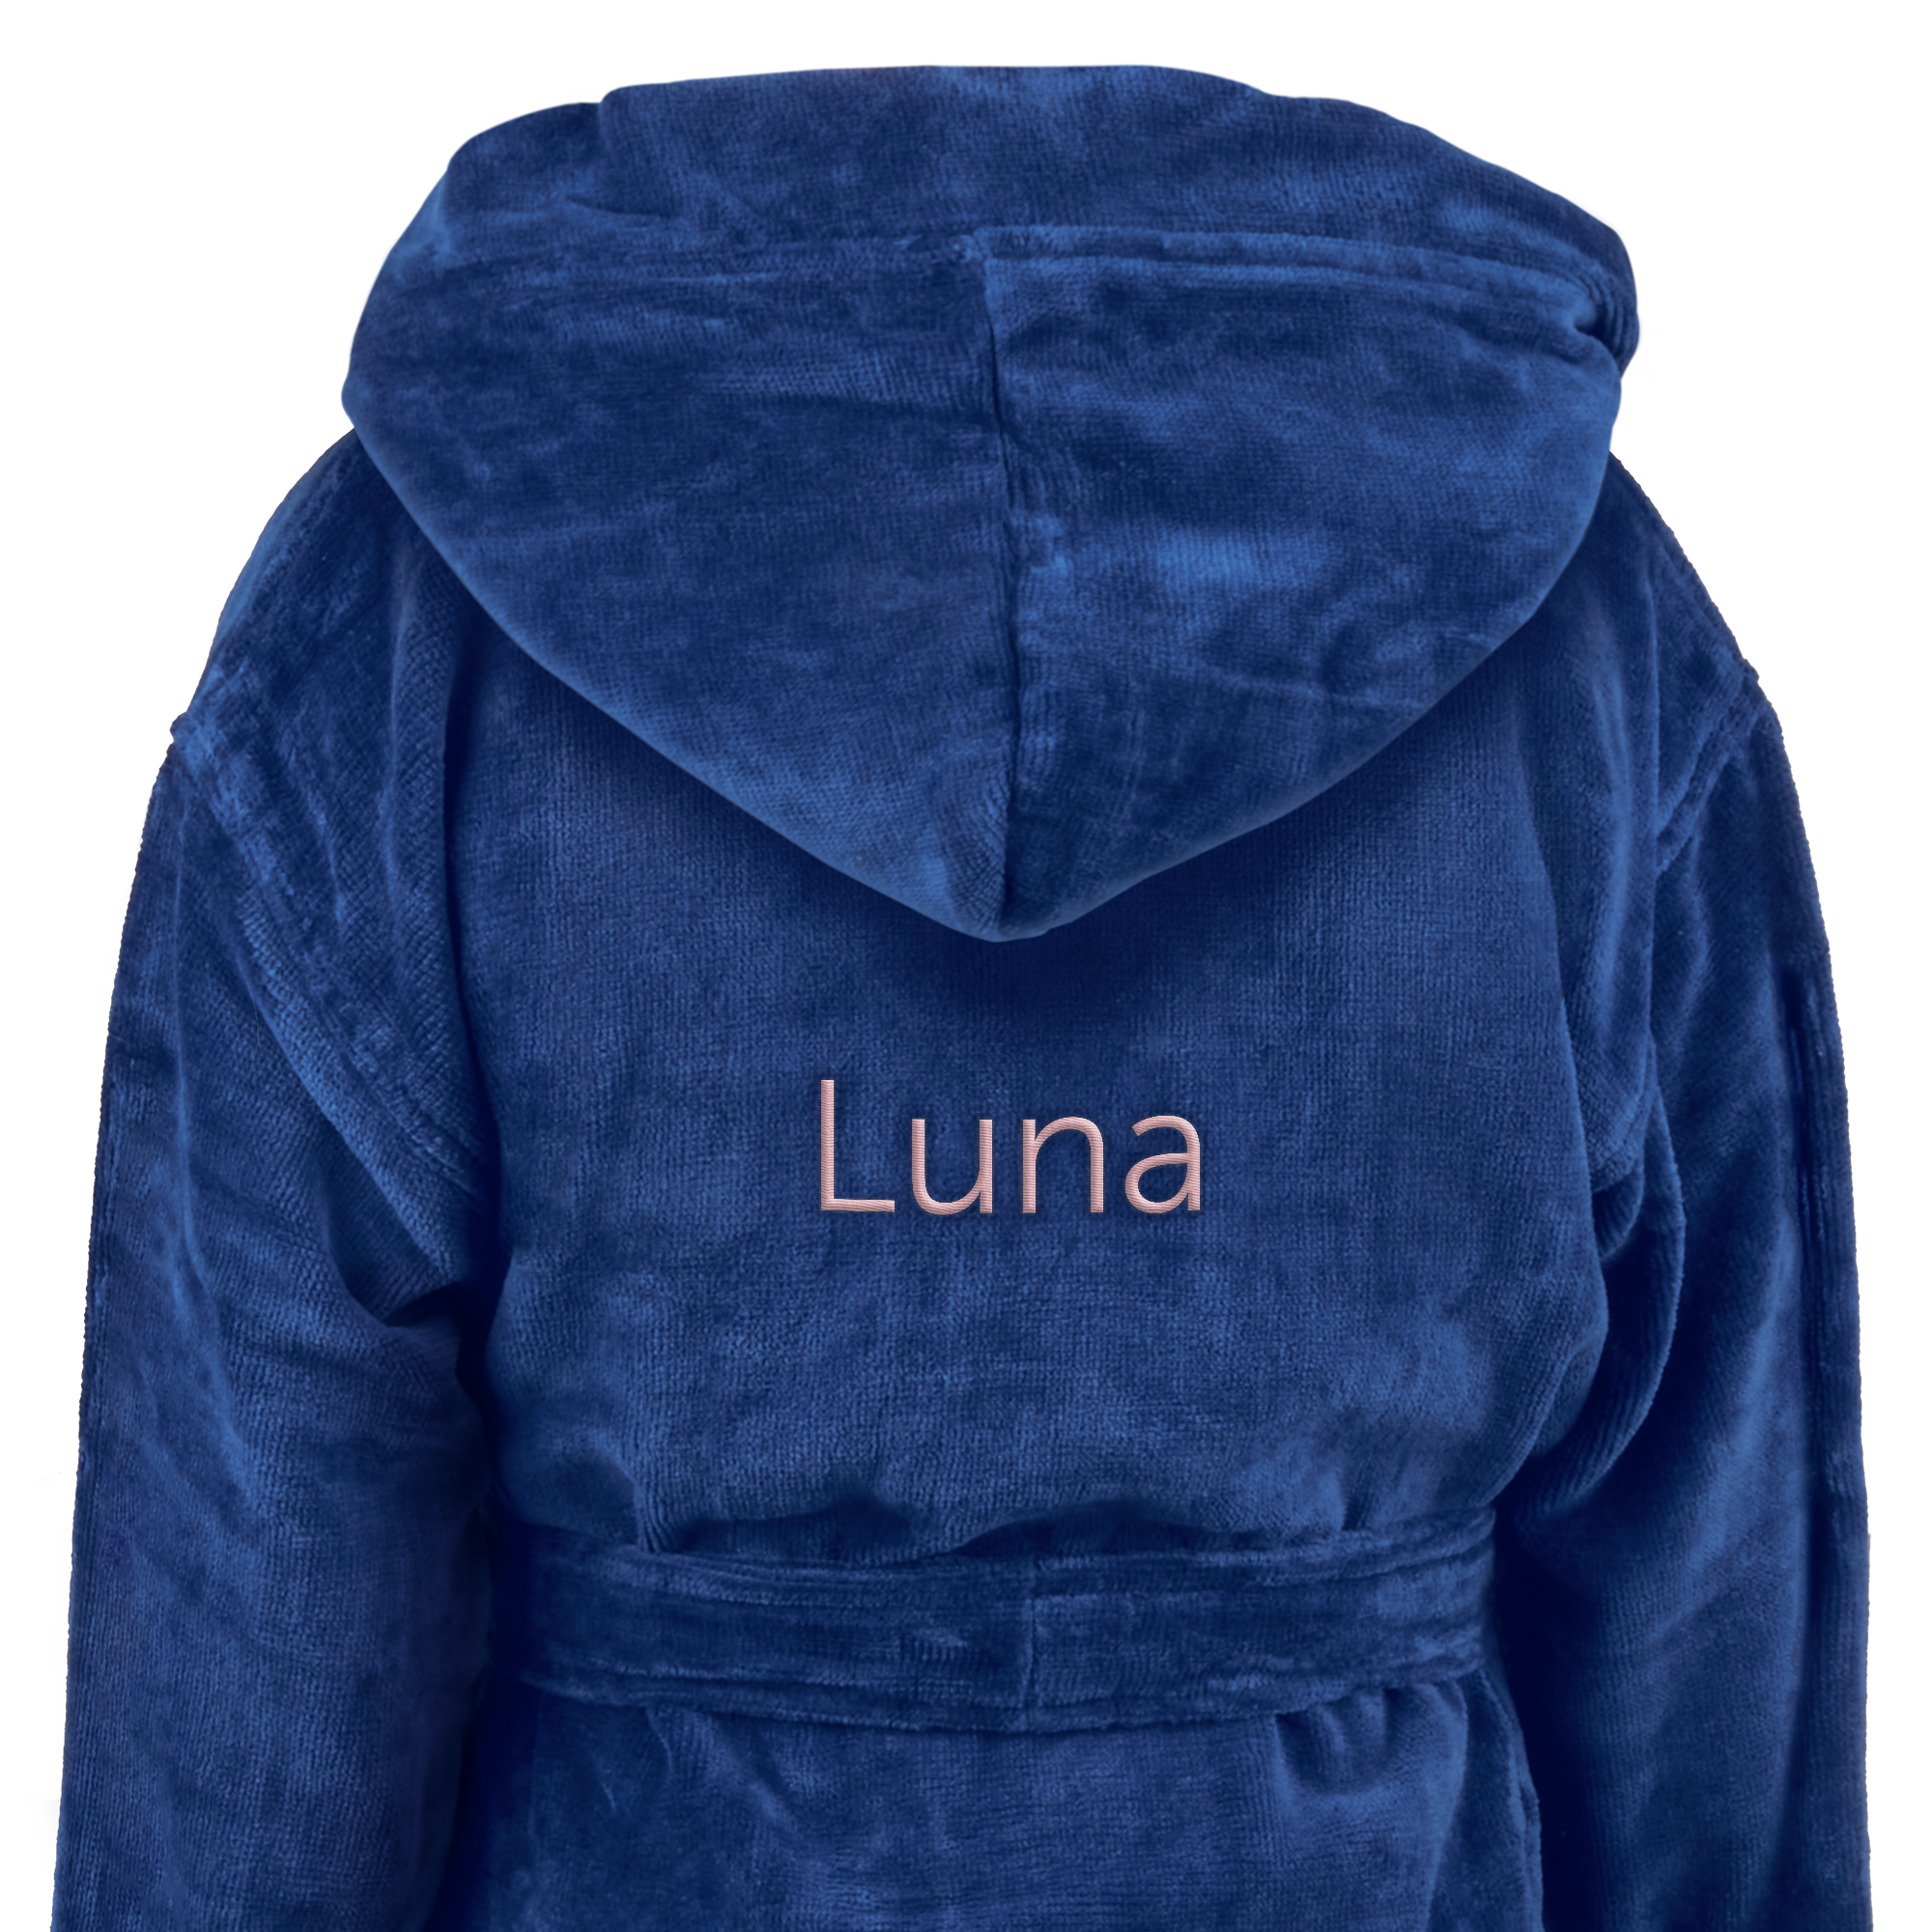 Personalised kids bathrobe - Blue - 6-8 yrs